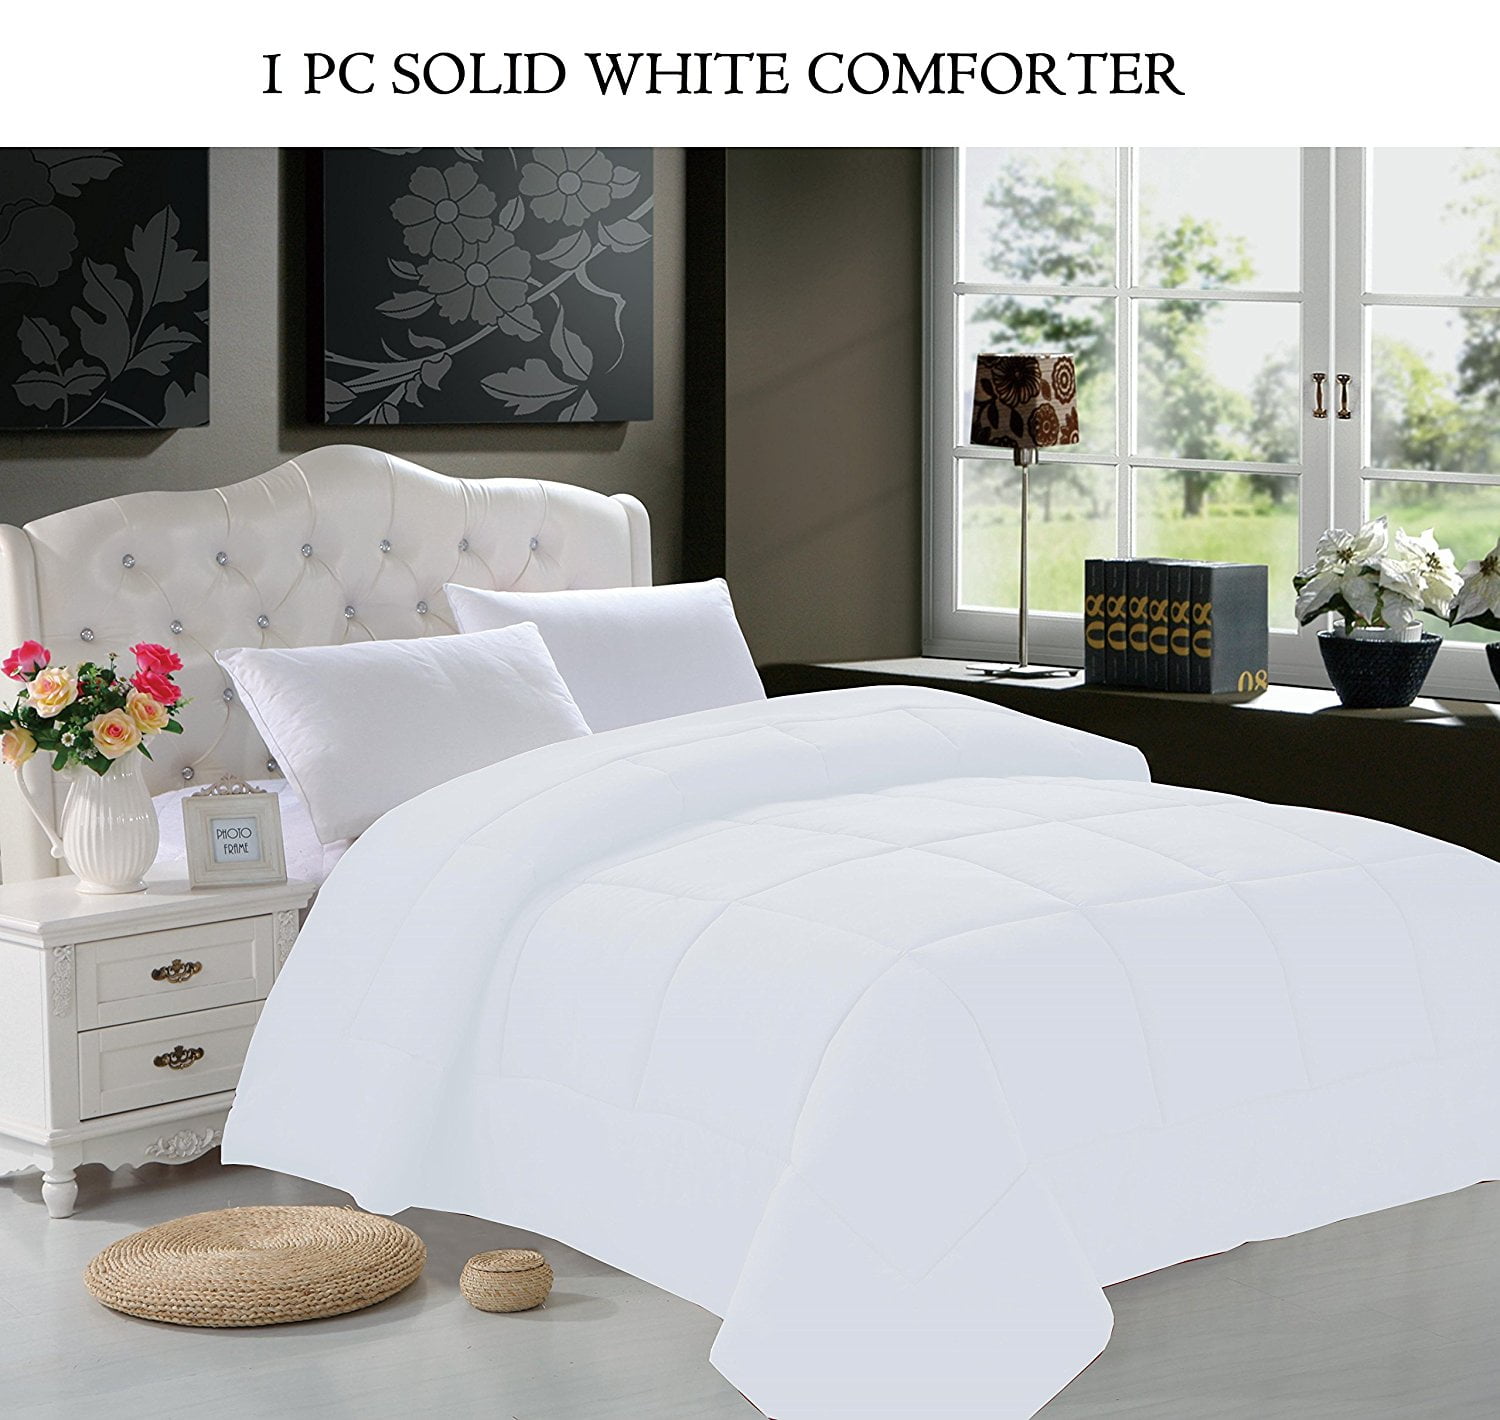 1pc Solid White Comforter Full Queen, Solid White Duvet Cover King